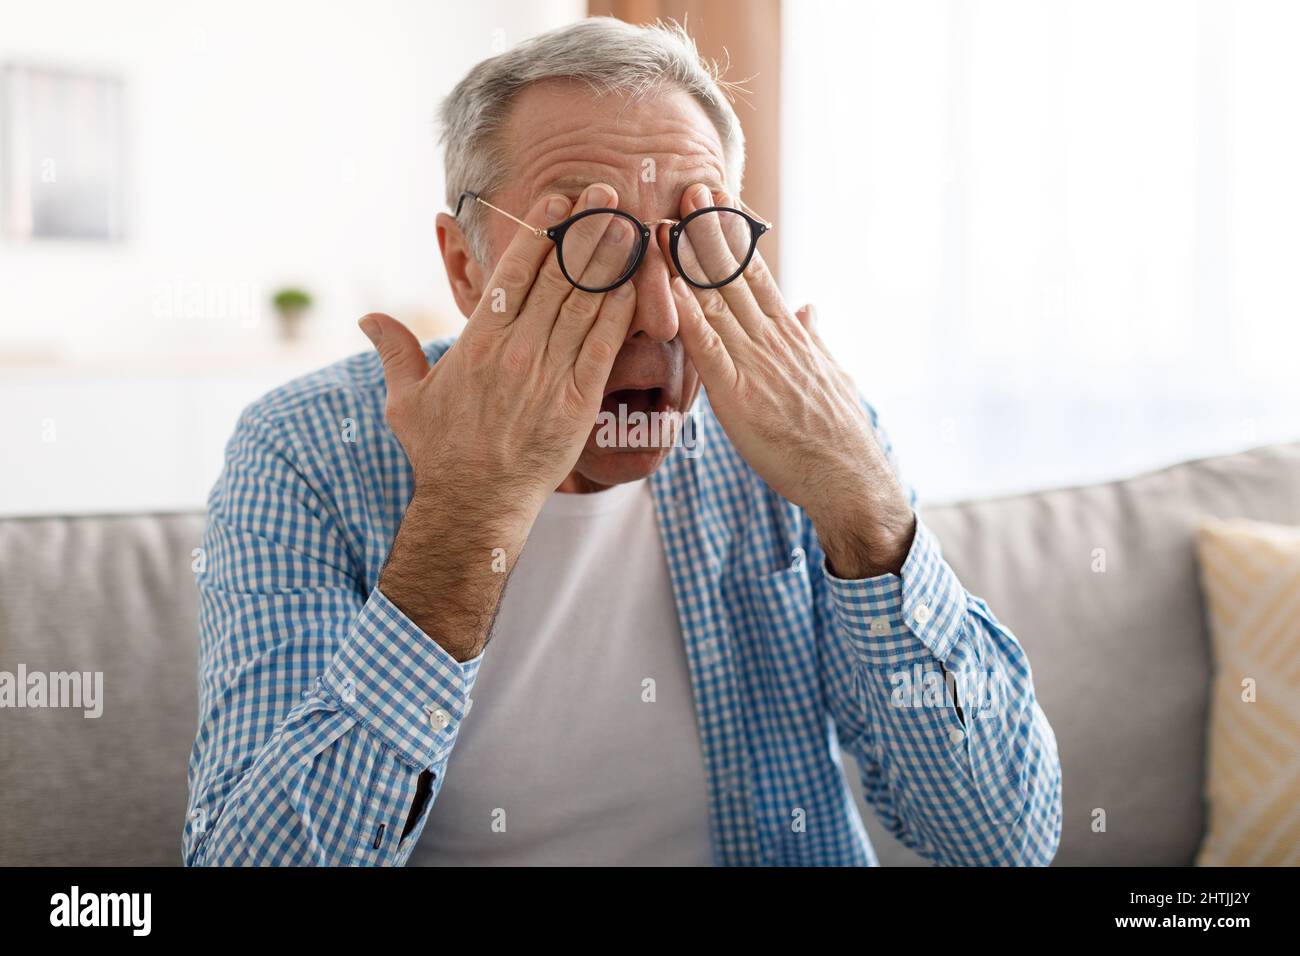 Glaucoma. Senior Man Rubbing Tired Eyes Wearing Eyeglasses Stock Photo